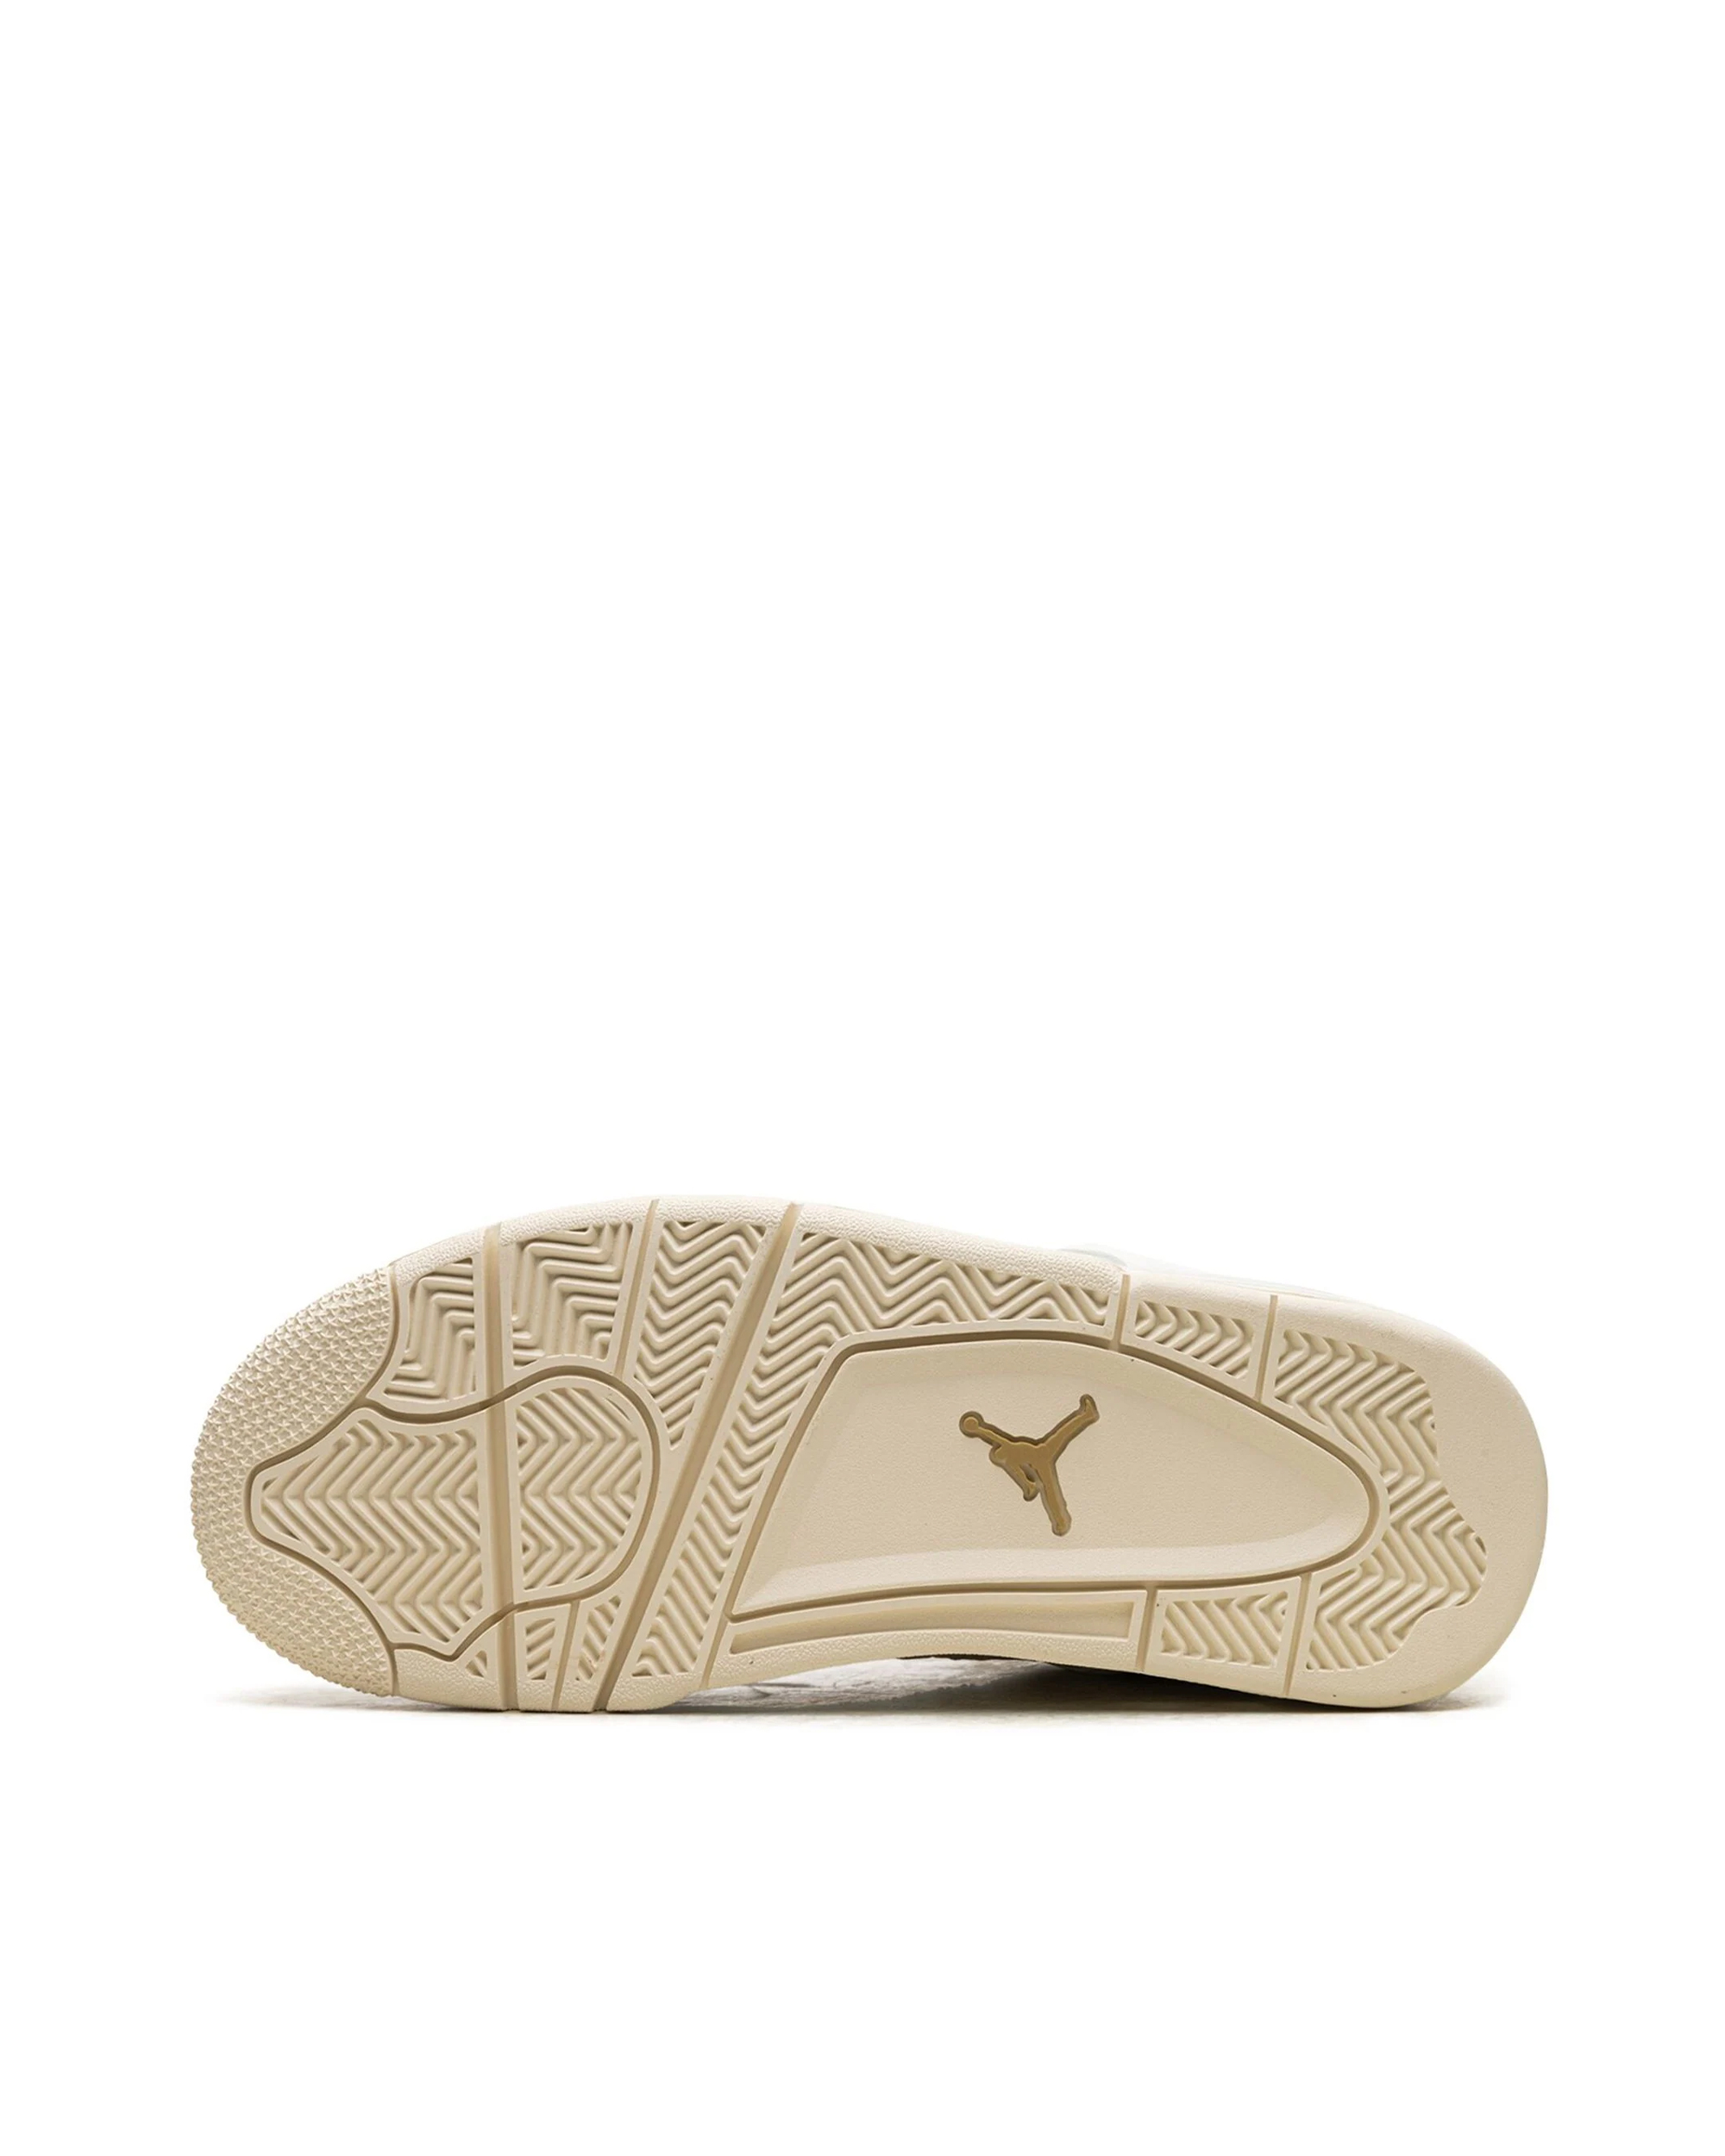 Shop Nike Air Jordan 4 Sail Metallic Gold